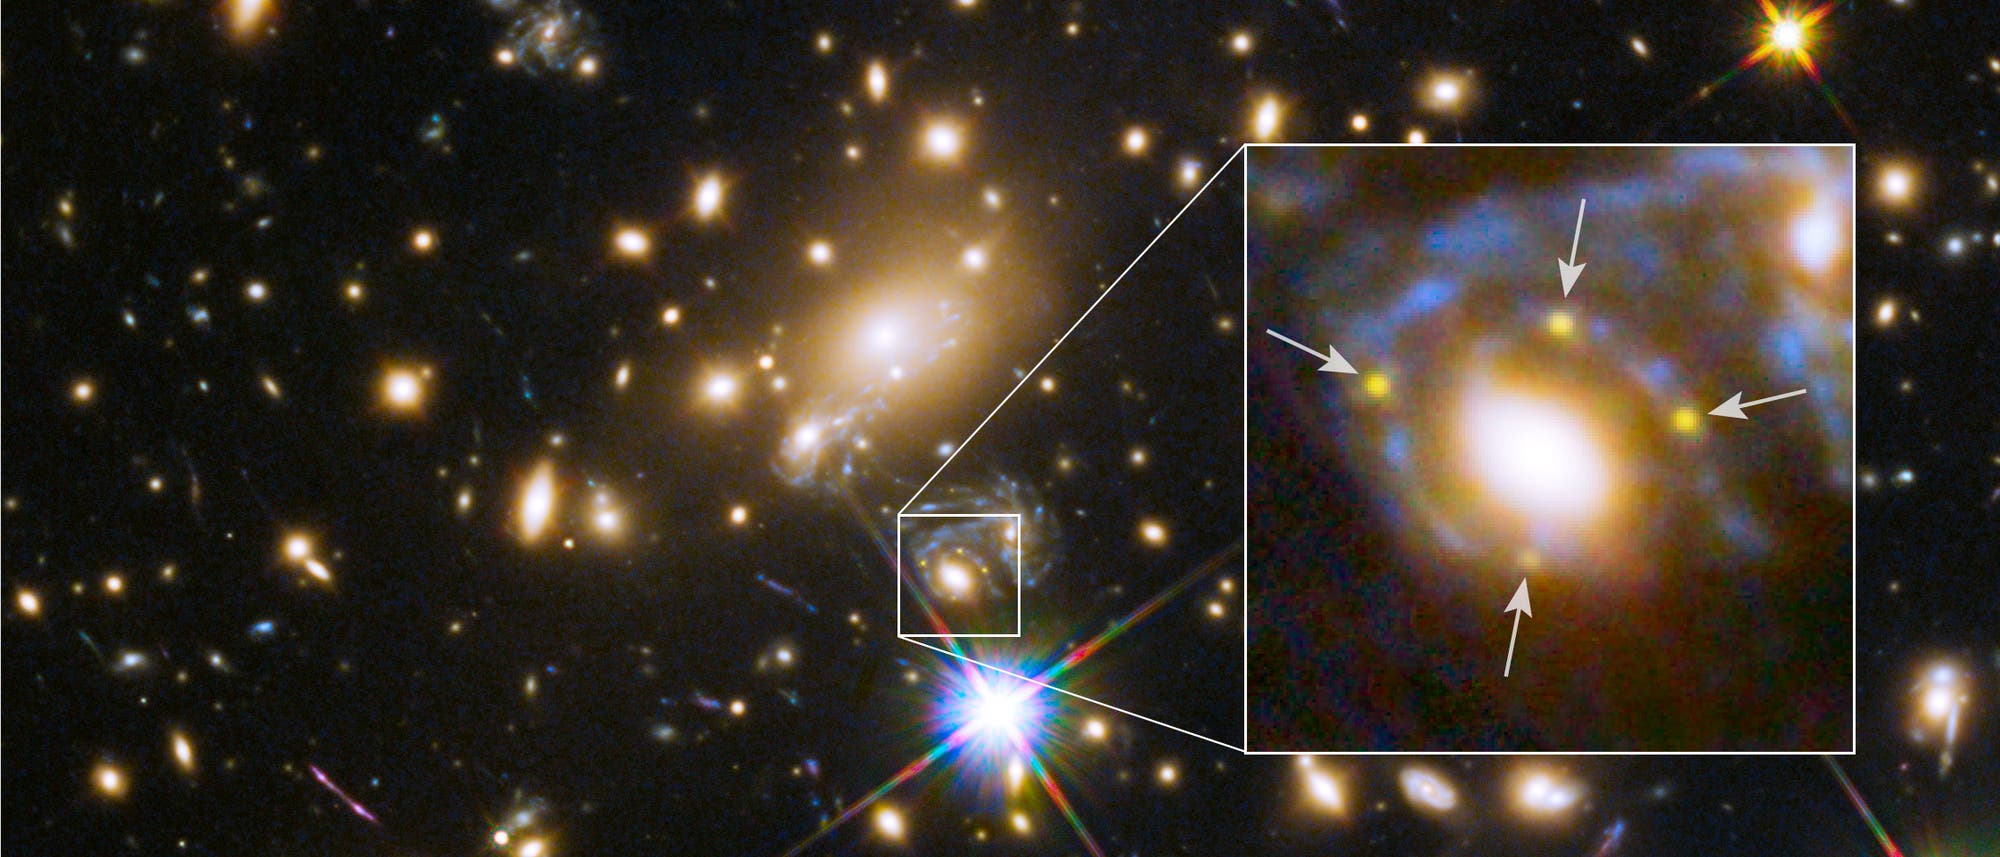 Supernova Refsdal und Galaxien-Cluster MACS J1149.6+2223